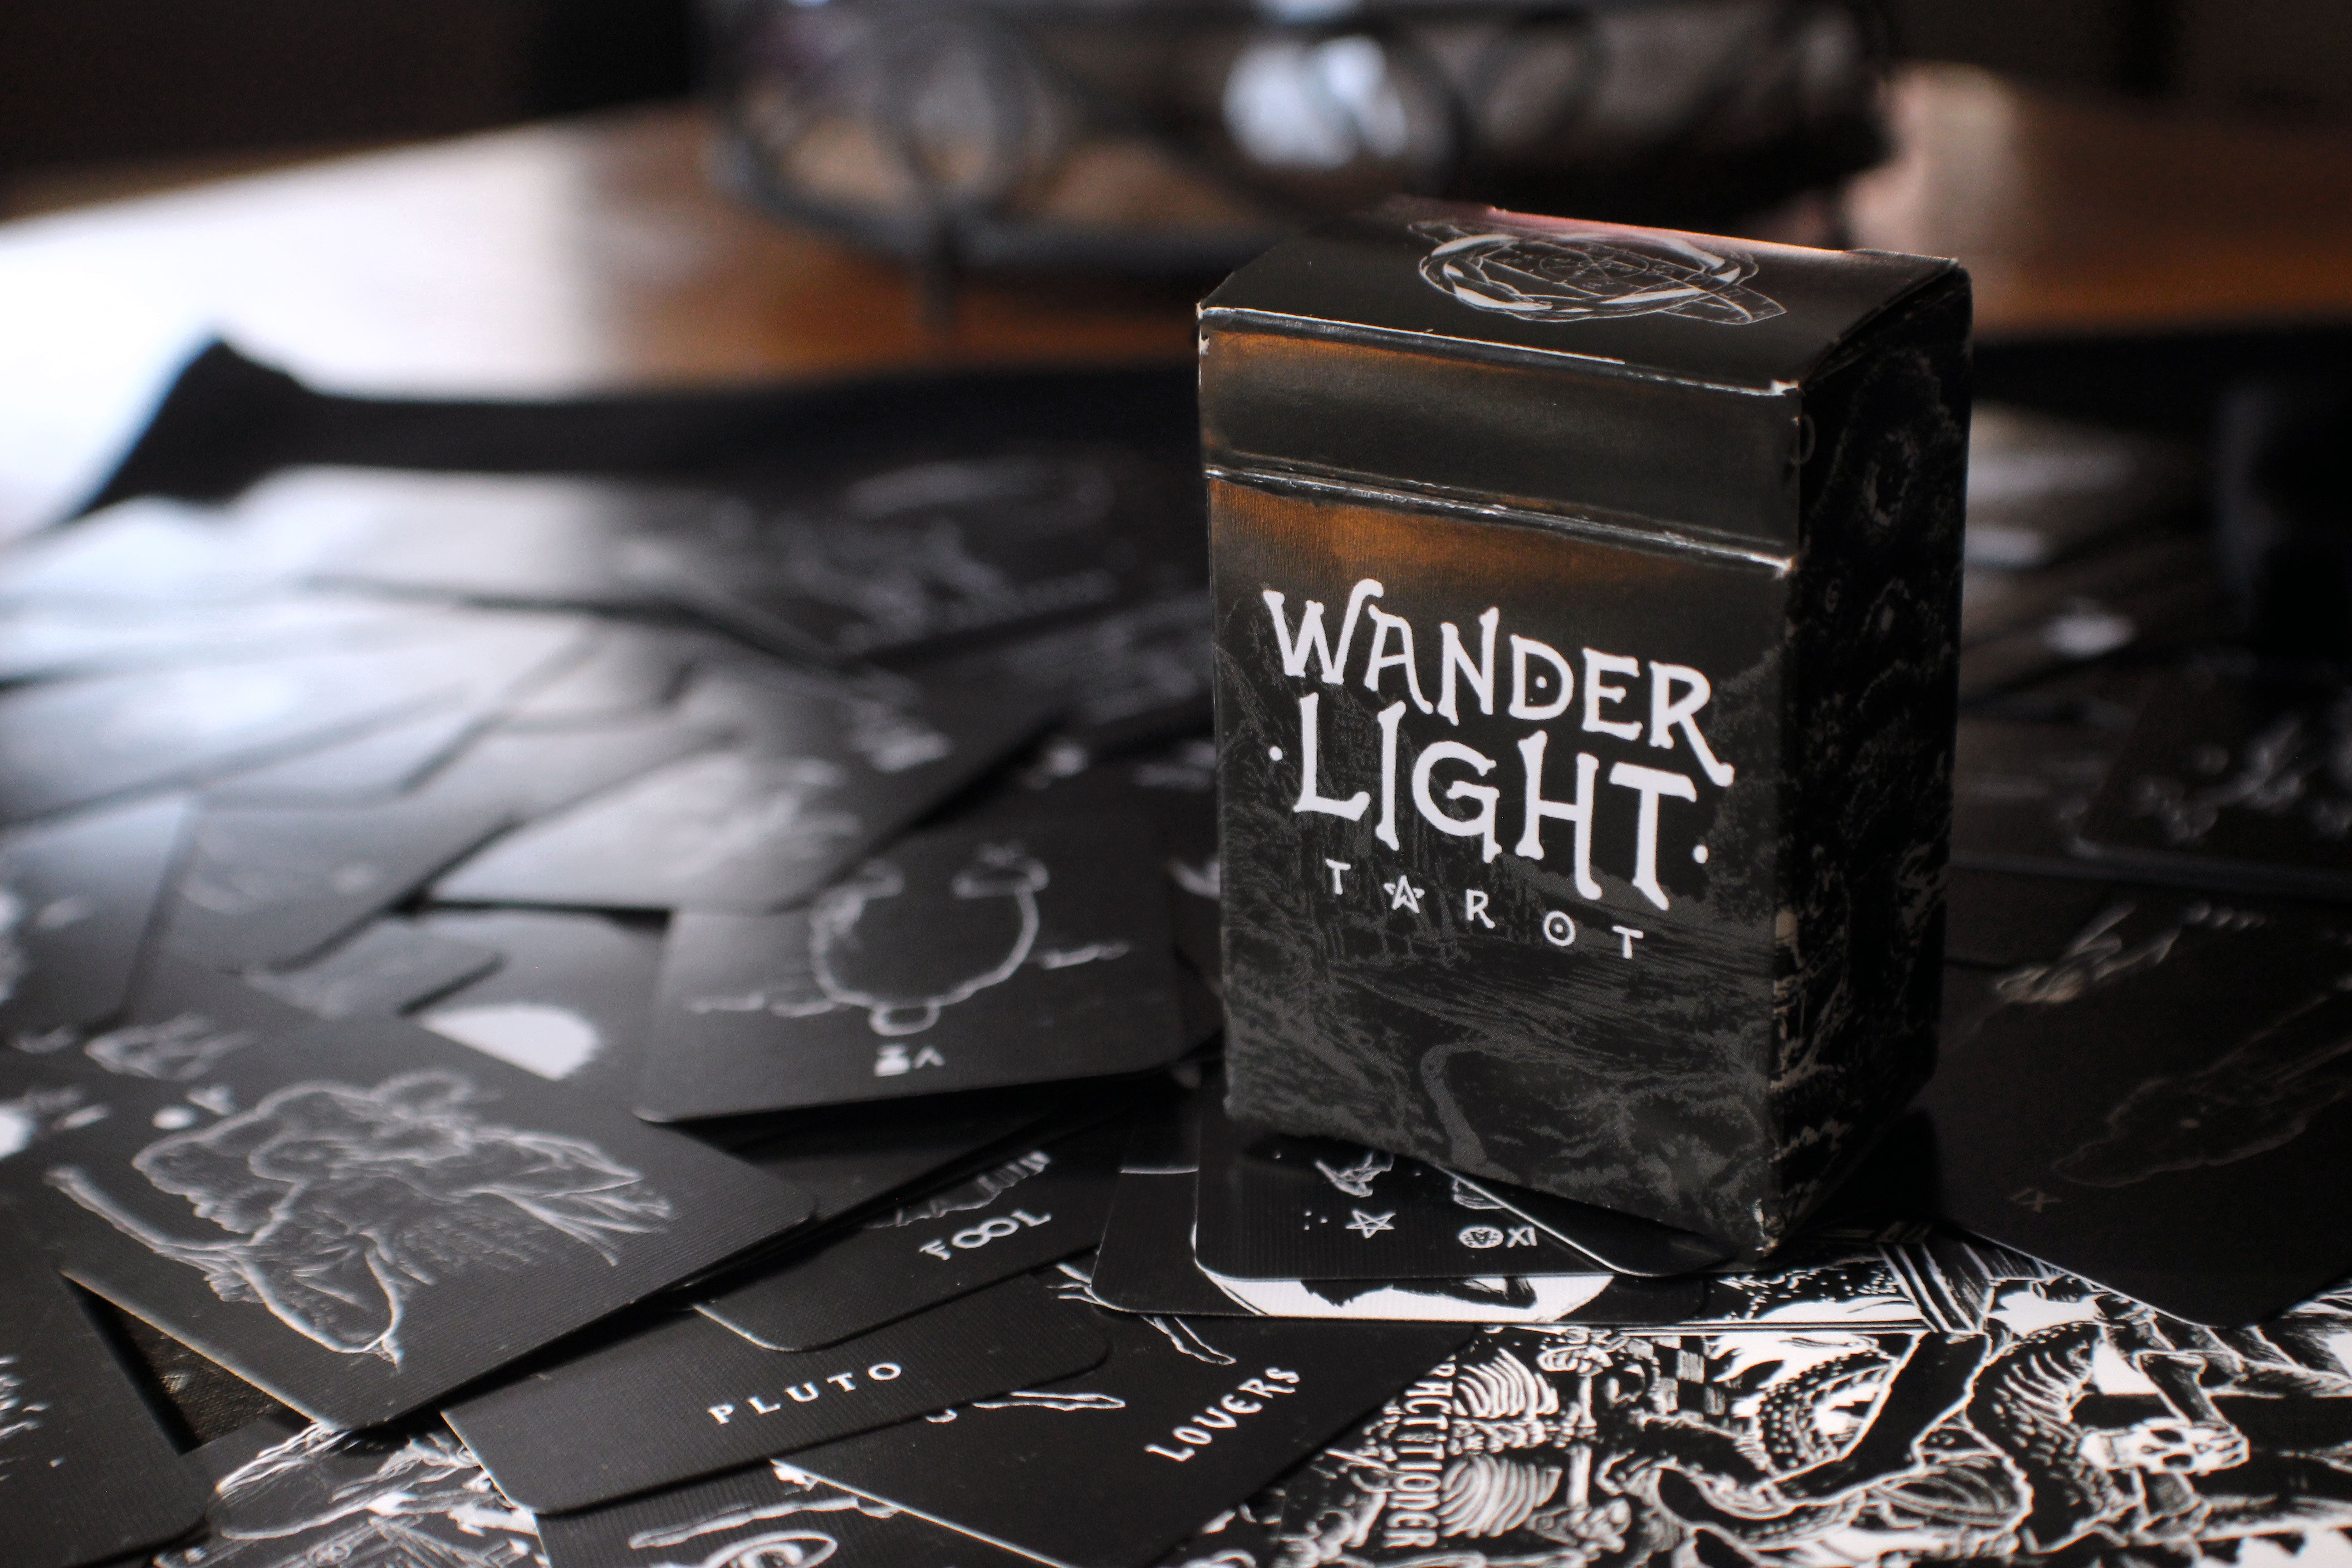 Wander Light Tarot Deck by Illustrator Eric Tecce